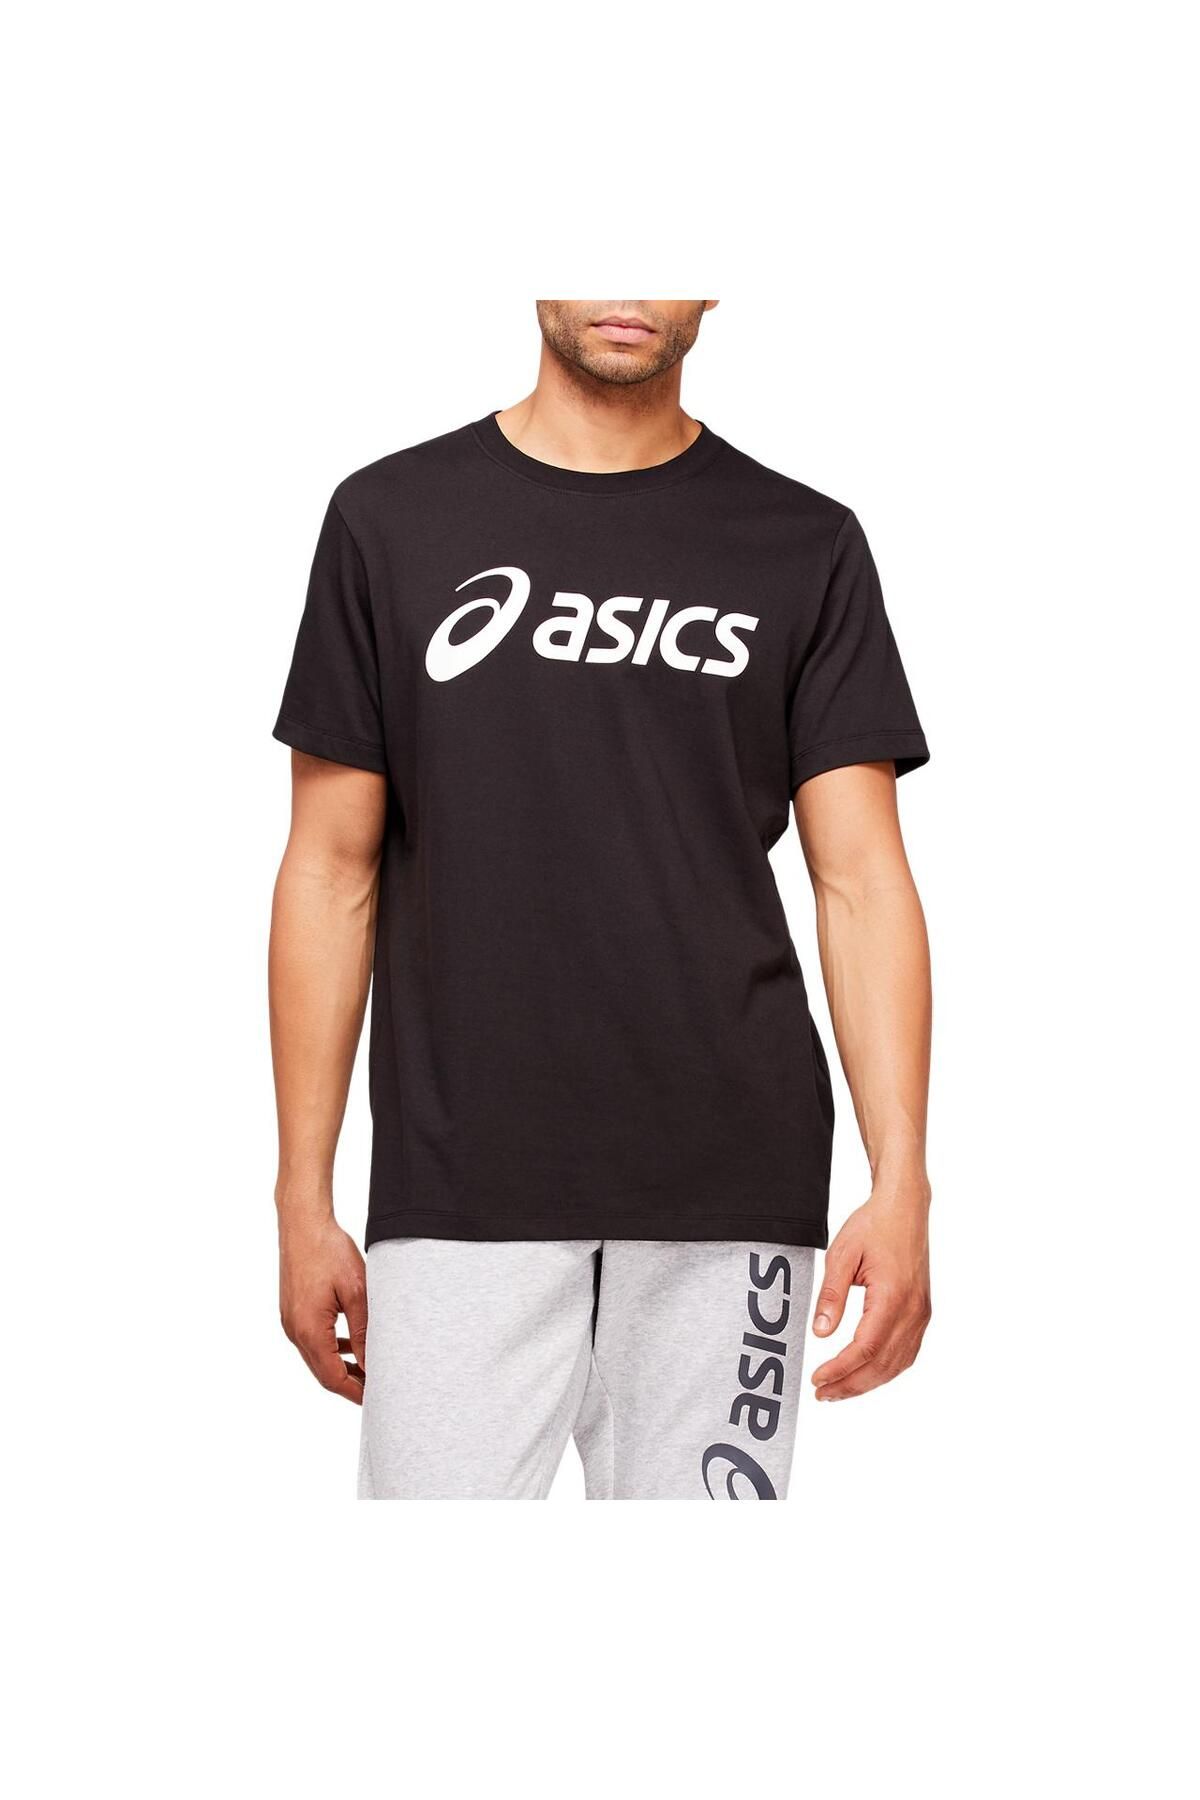 Asics Big Logo Tee Erkek Siyah Kısa Kollu Tshirt 2031a978-001